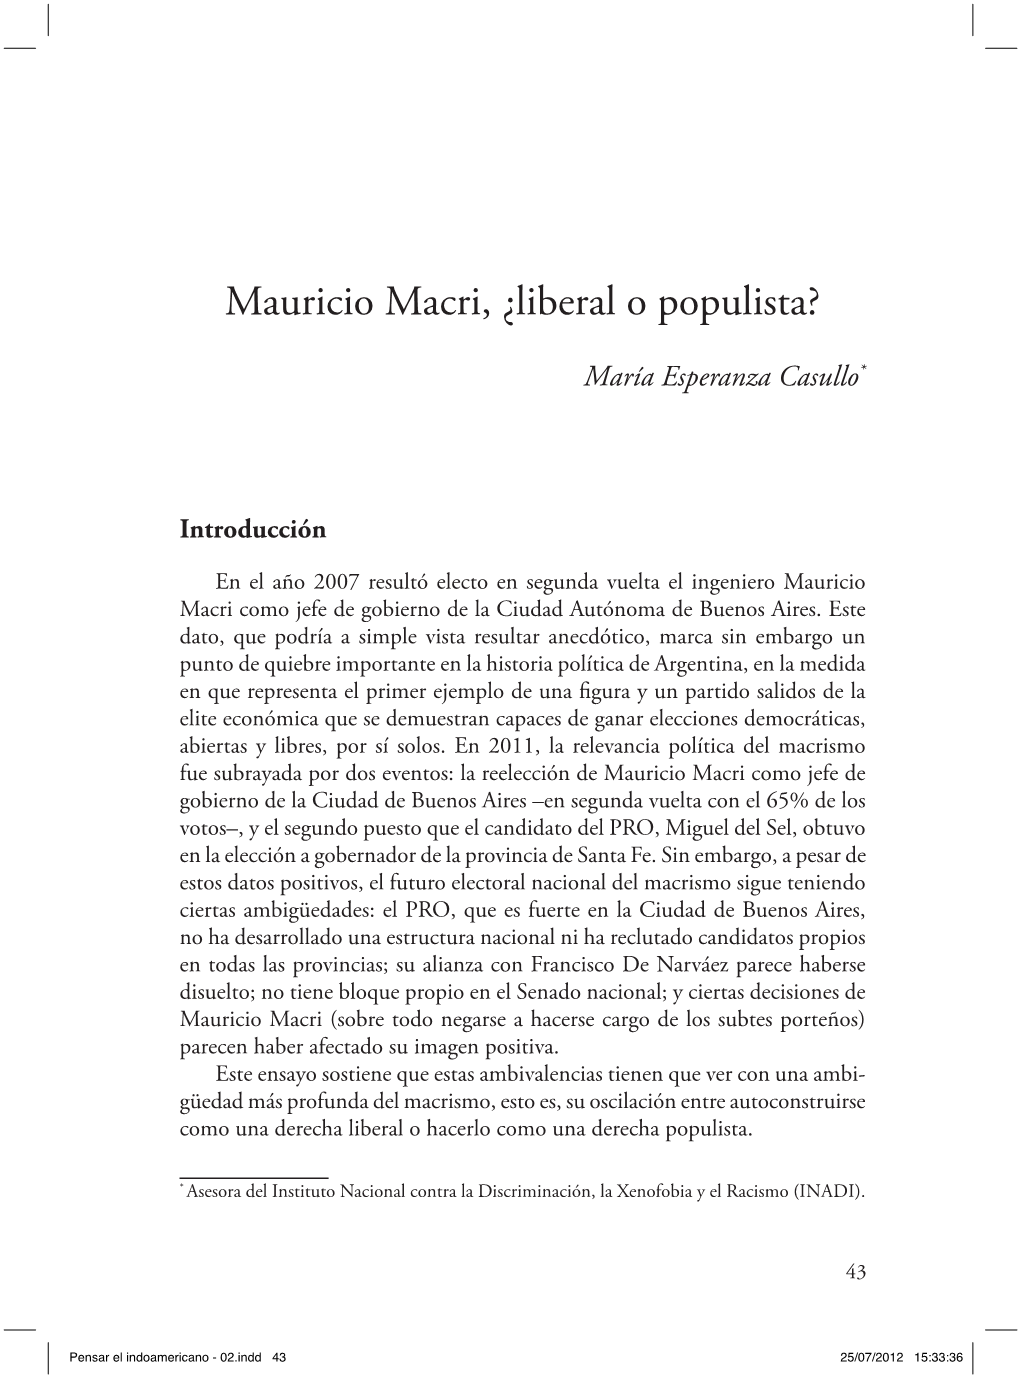 Mauricio Macri, ¿Liberal O Populista?